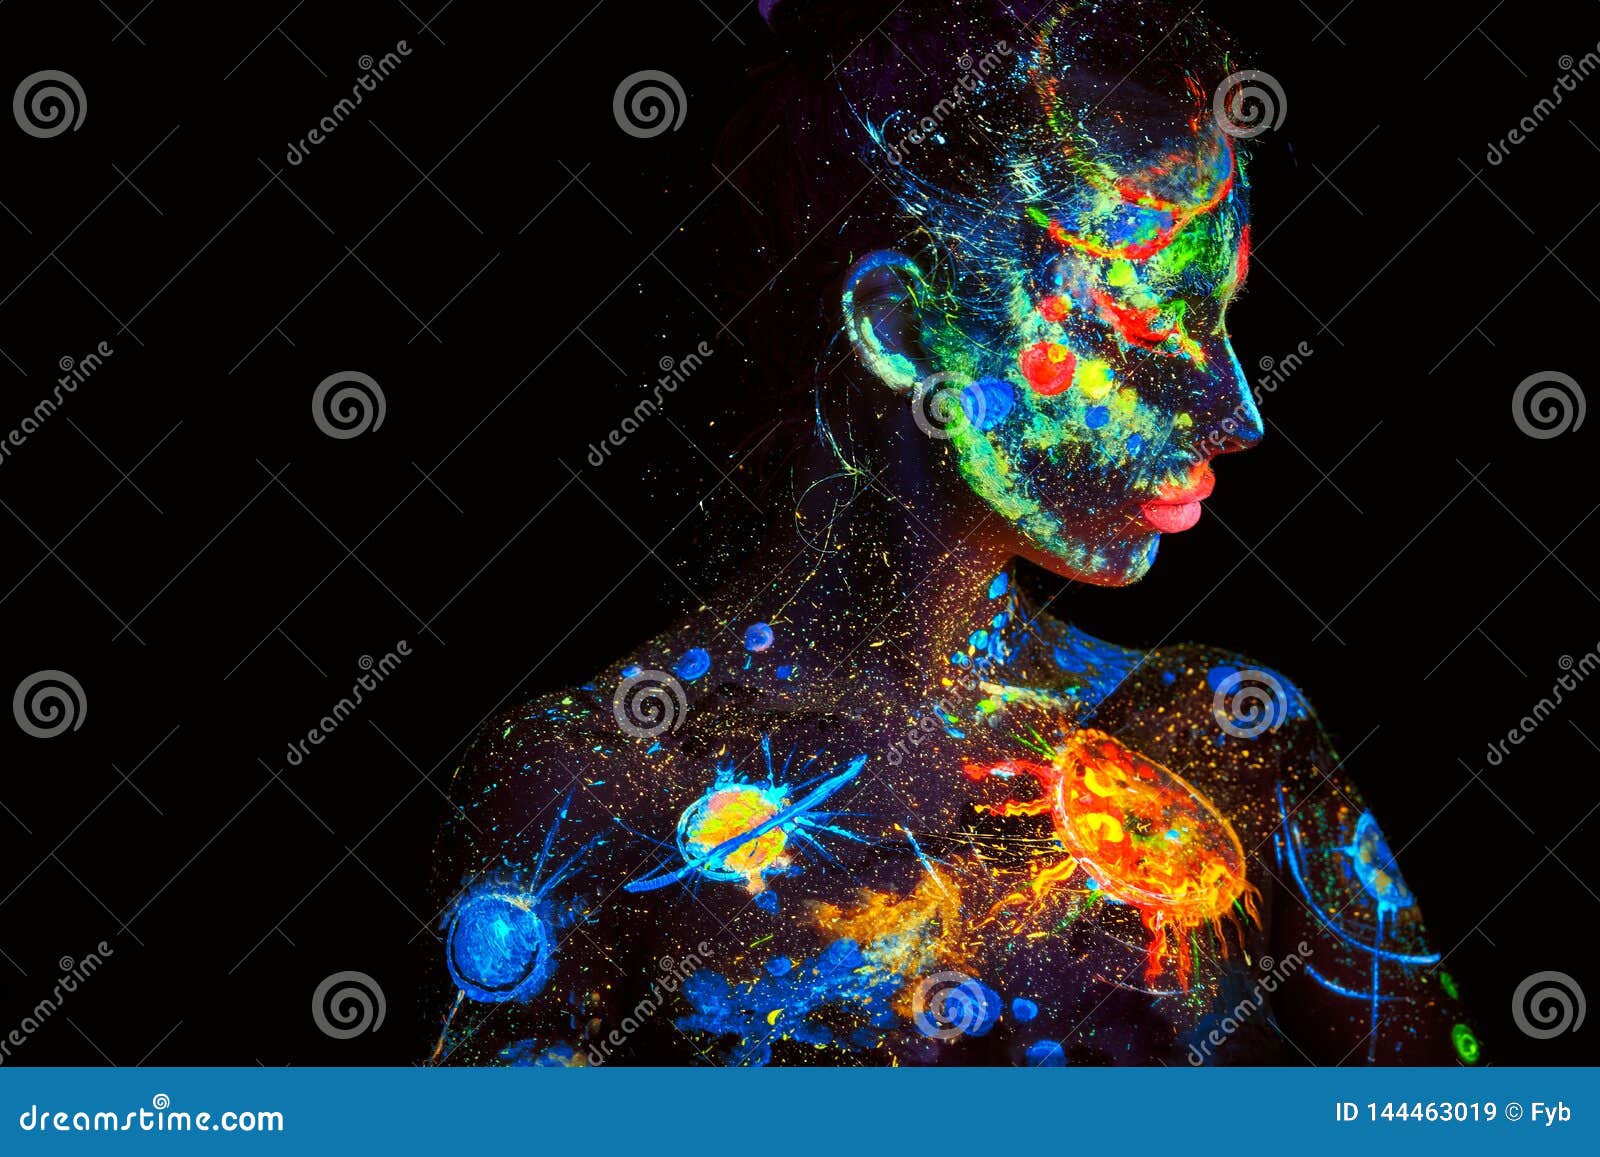 cosmic close up uv portrait